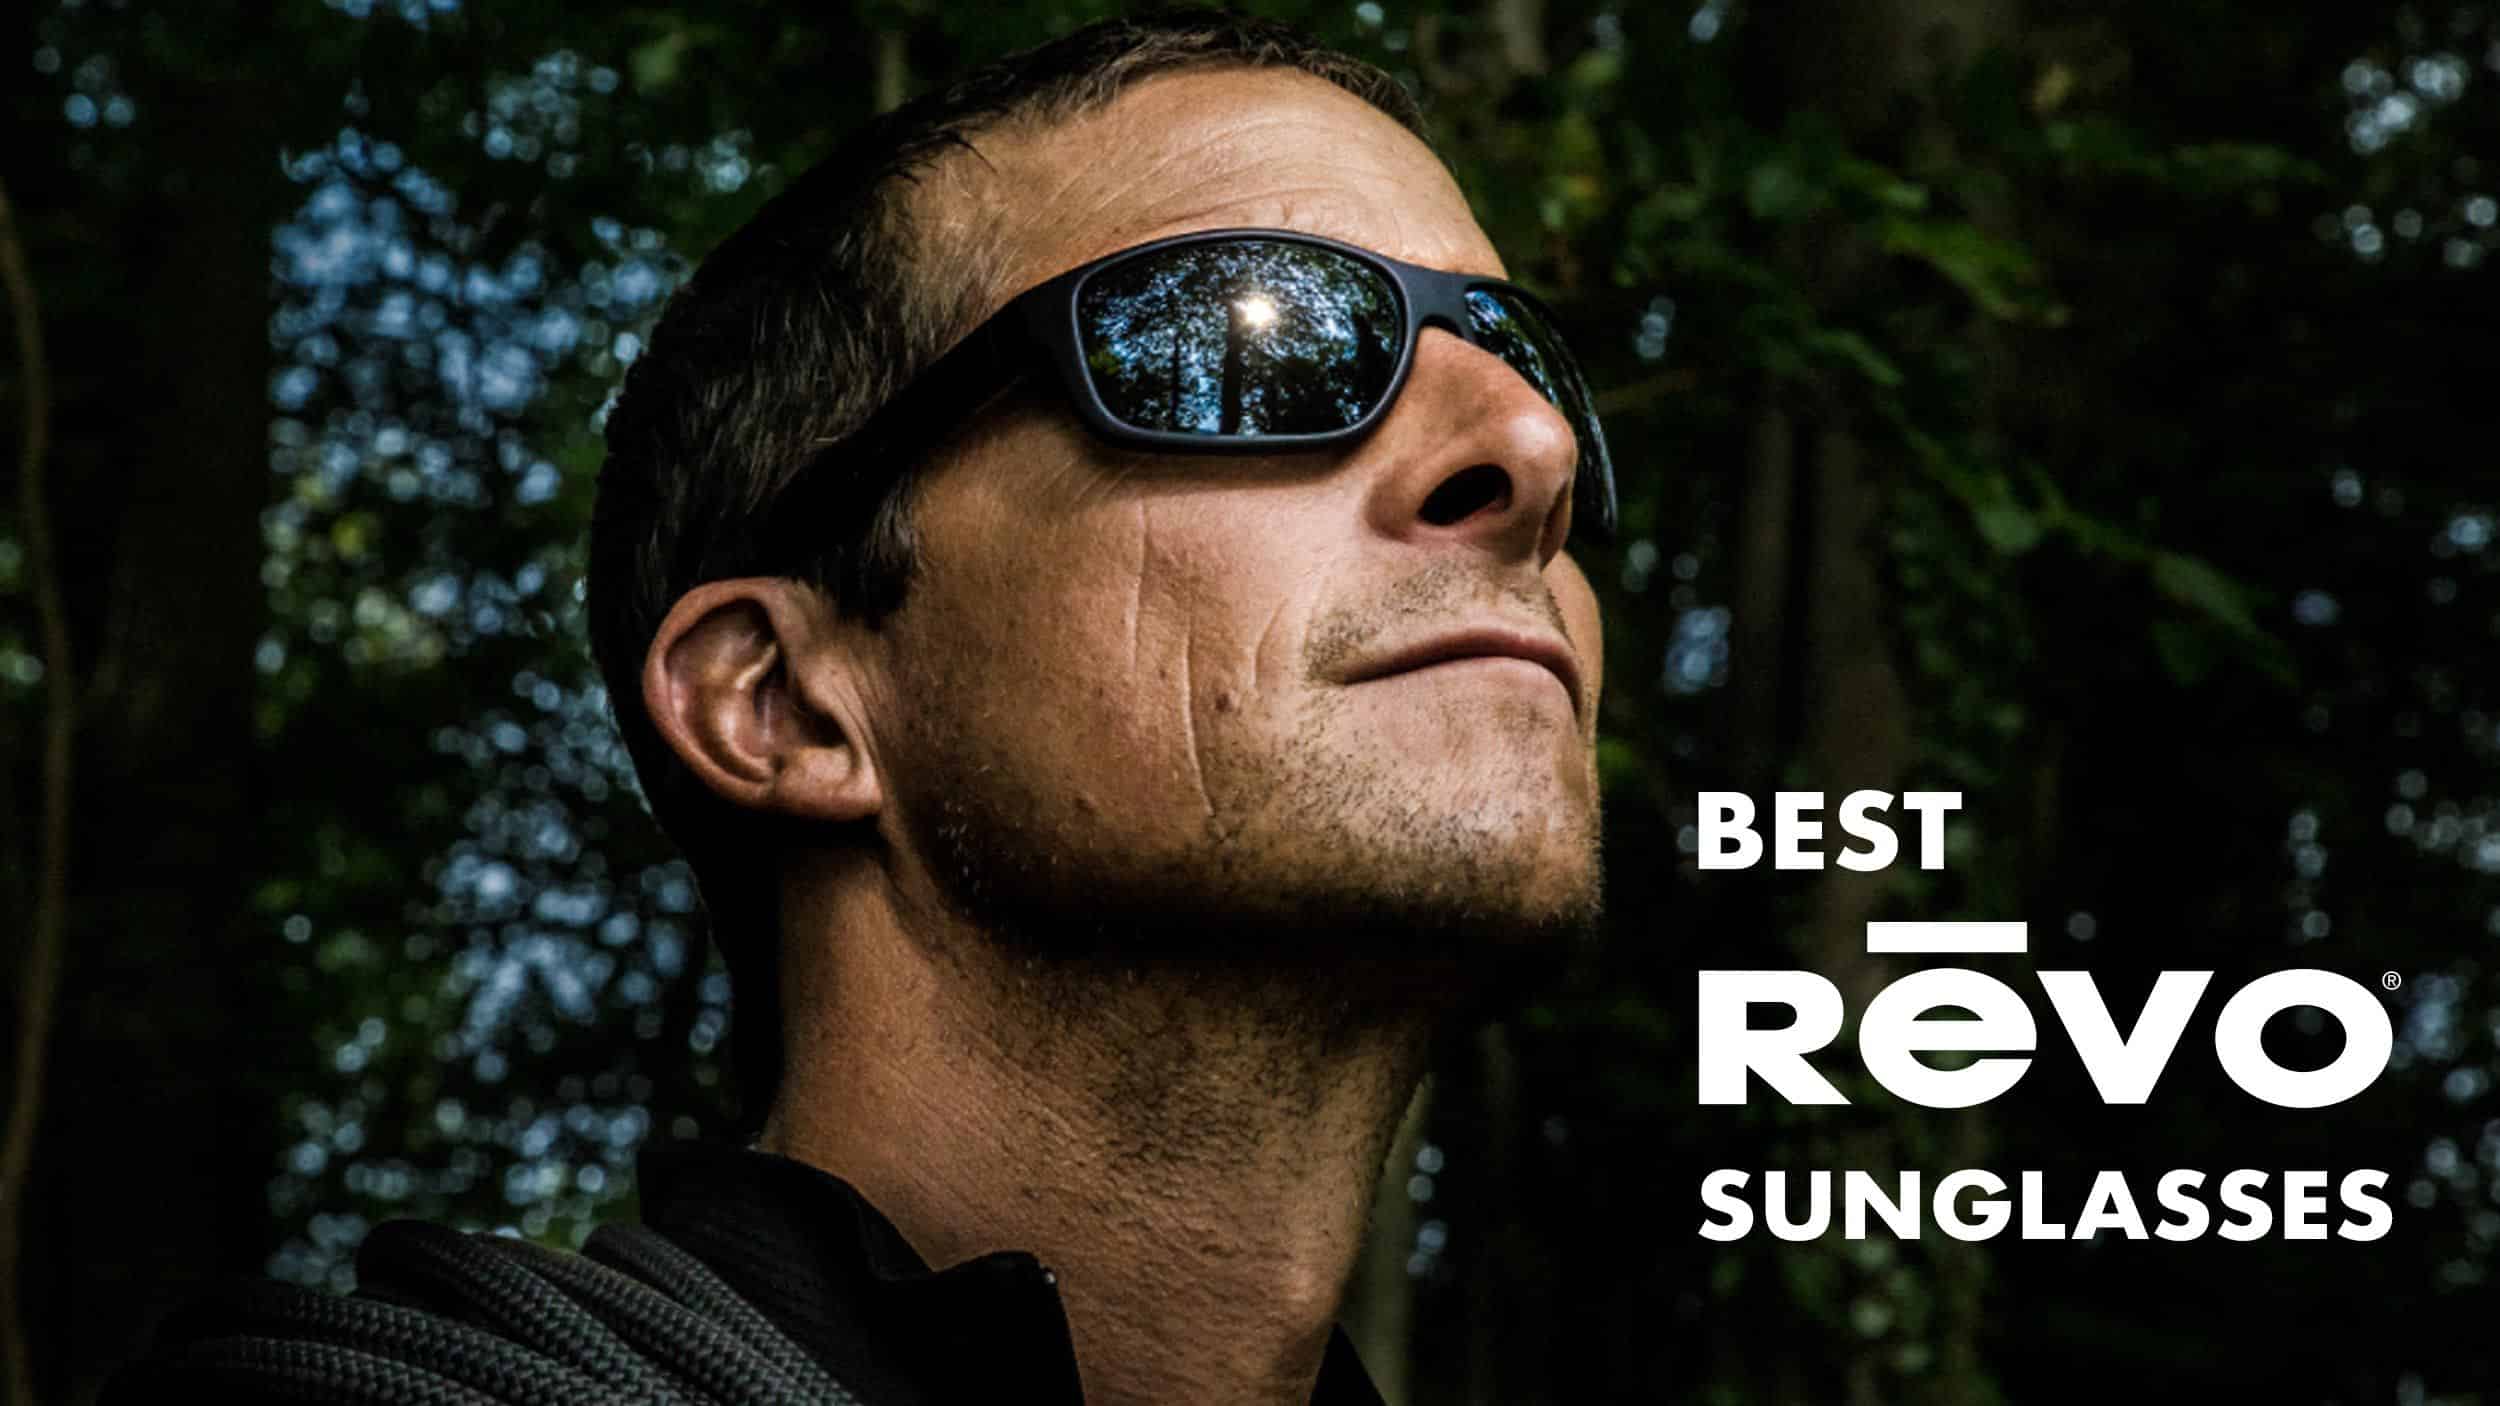 Five Best Revo Sunglasses Header